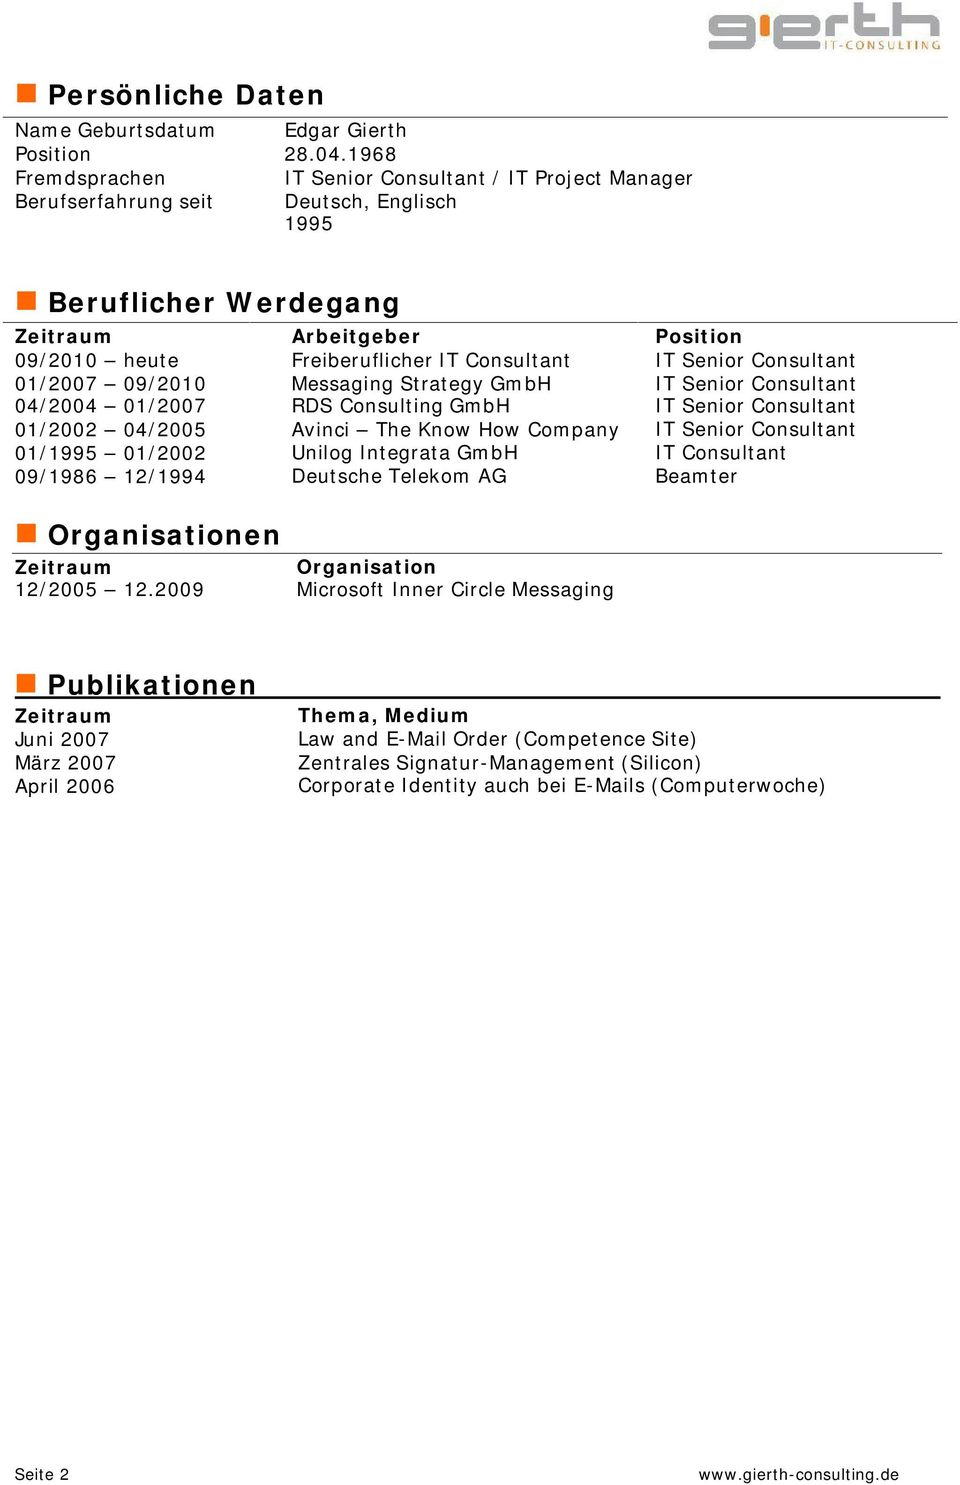 Arbeitgeber Freiberuflicher IT Consultant Messaging Strategy GmbH RDS Consulting GmbH Avinci The Know How Company Unilog Integrata GmbH Deutsche Telekom AG Position IT Senior Consultant IT Senior